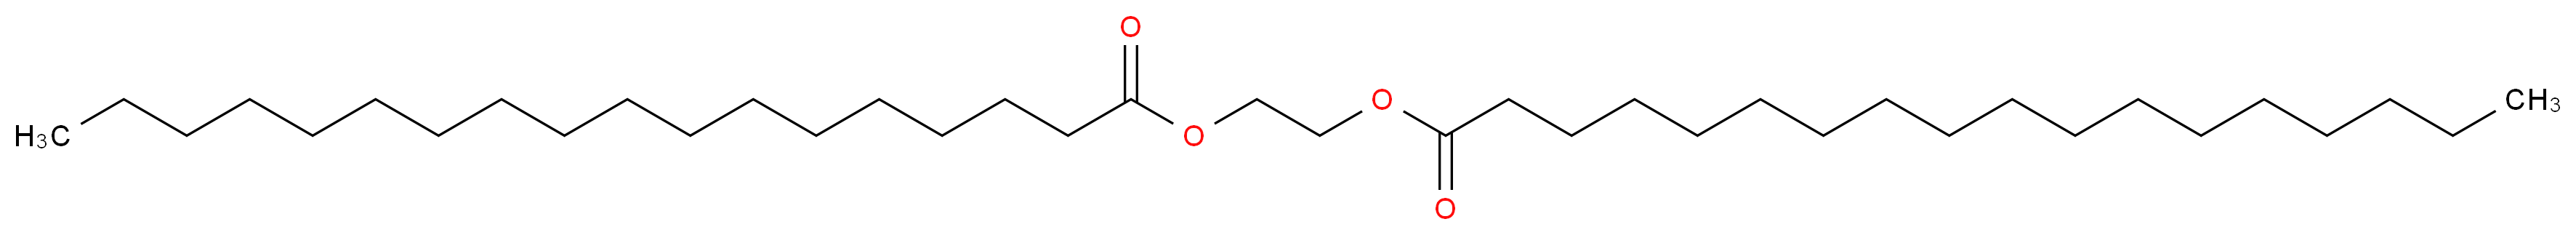 CAS_627-83-8 molecular structure